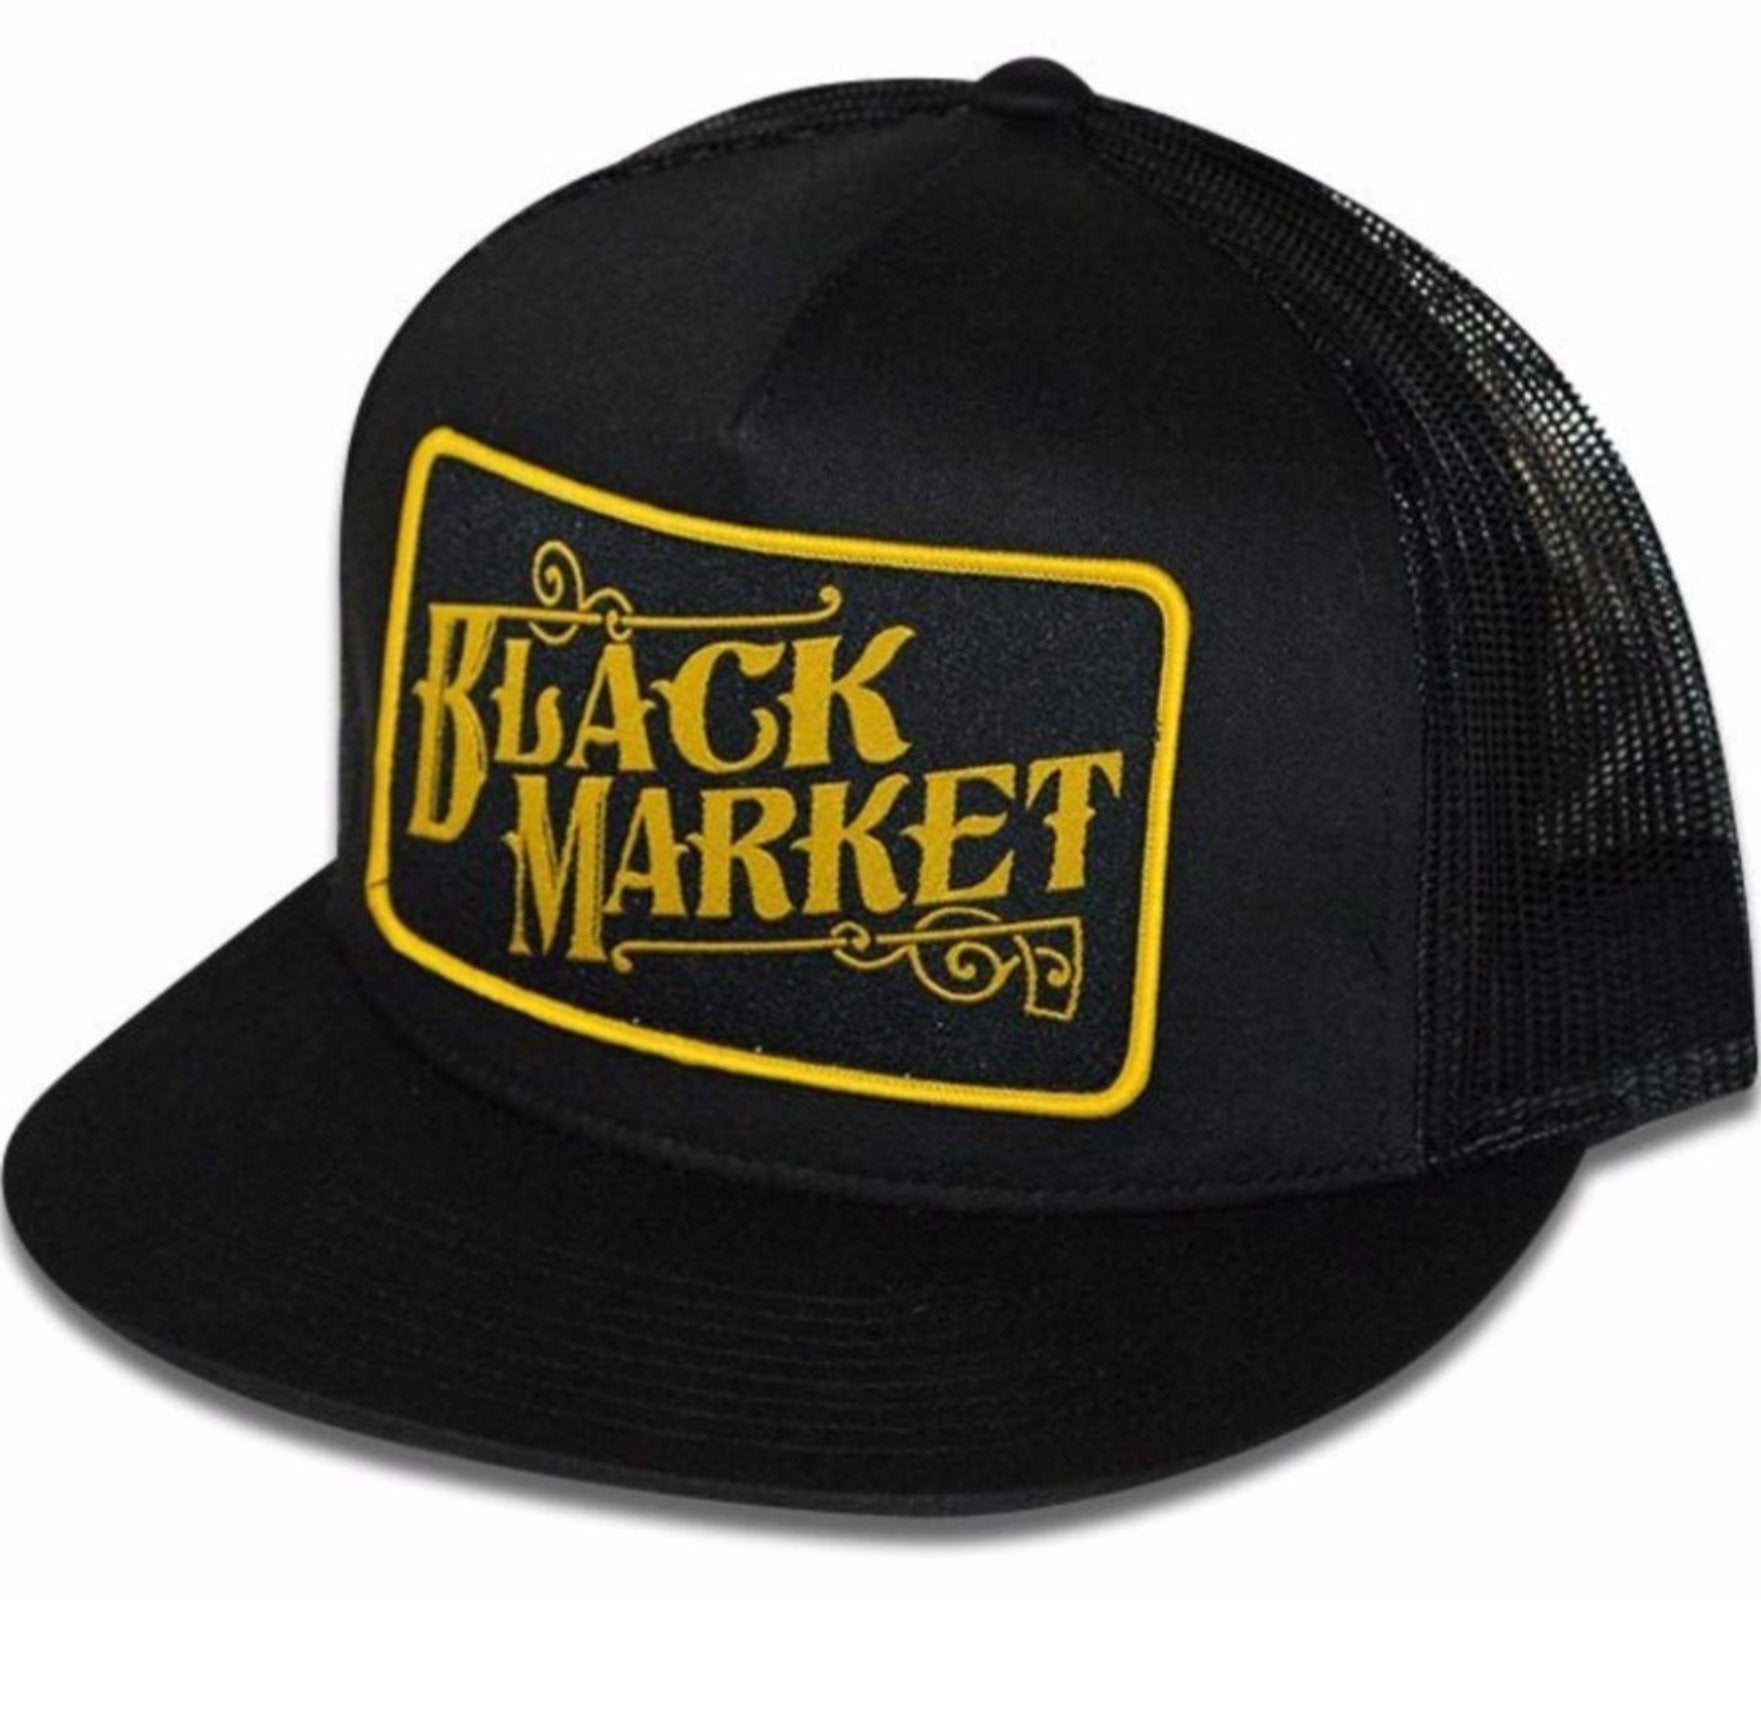 The BLACK MARKET Trucker Cap